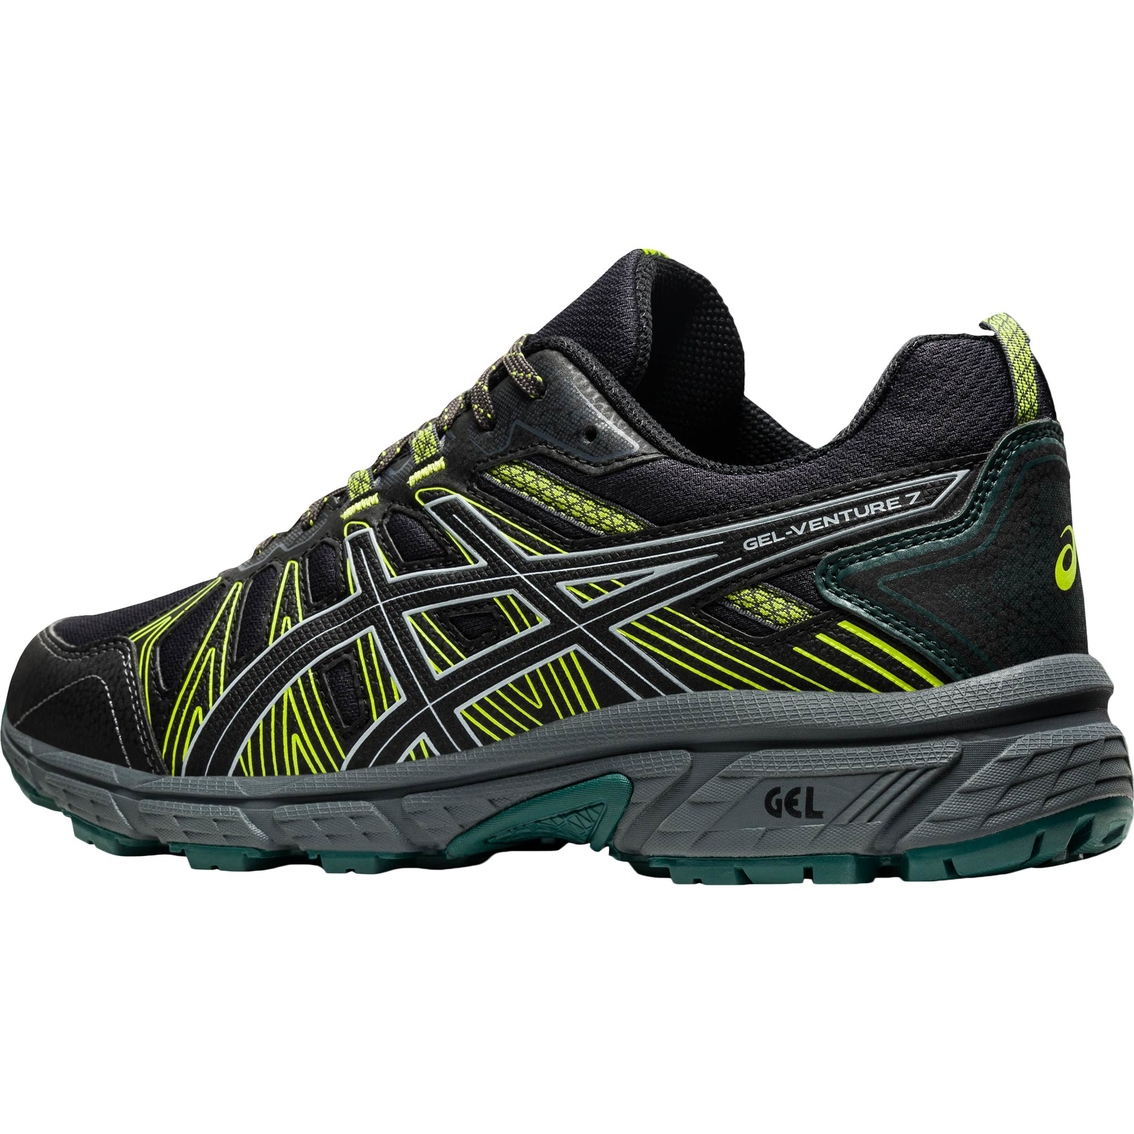 Asics Men's Gel-venture 7 Trail Running Shoes | Hiking & Trail | Shoes ...